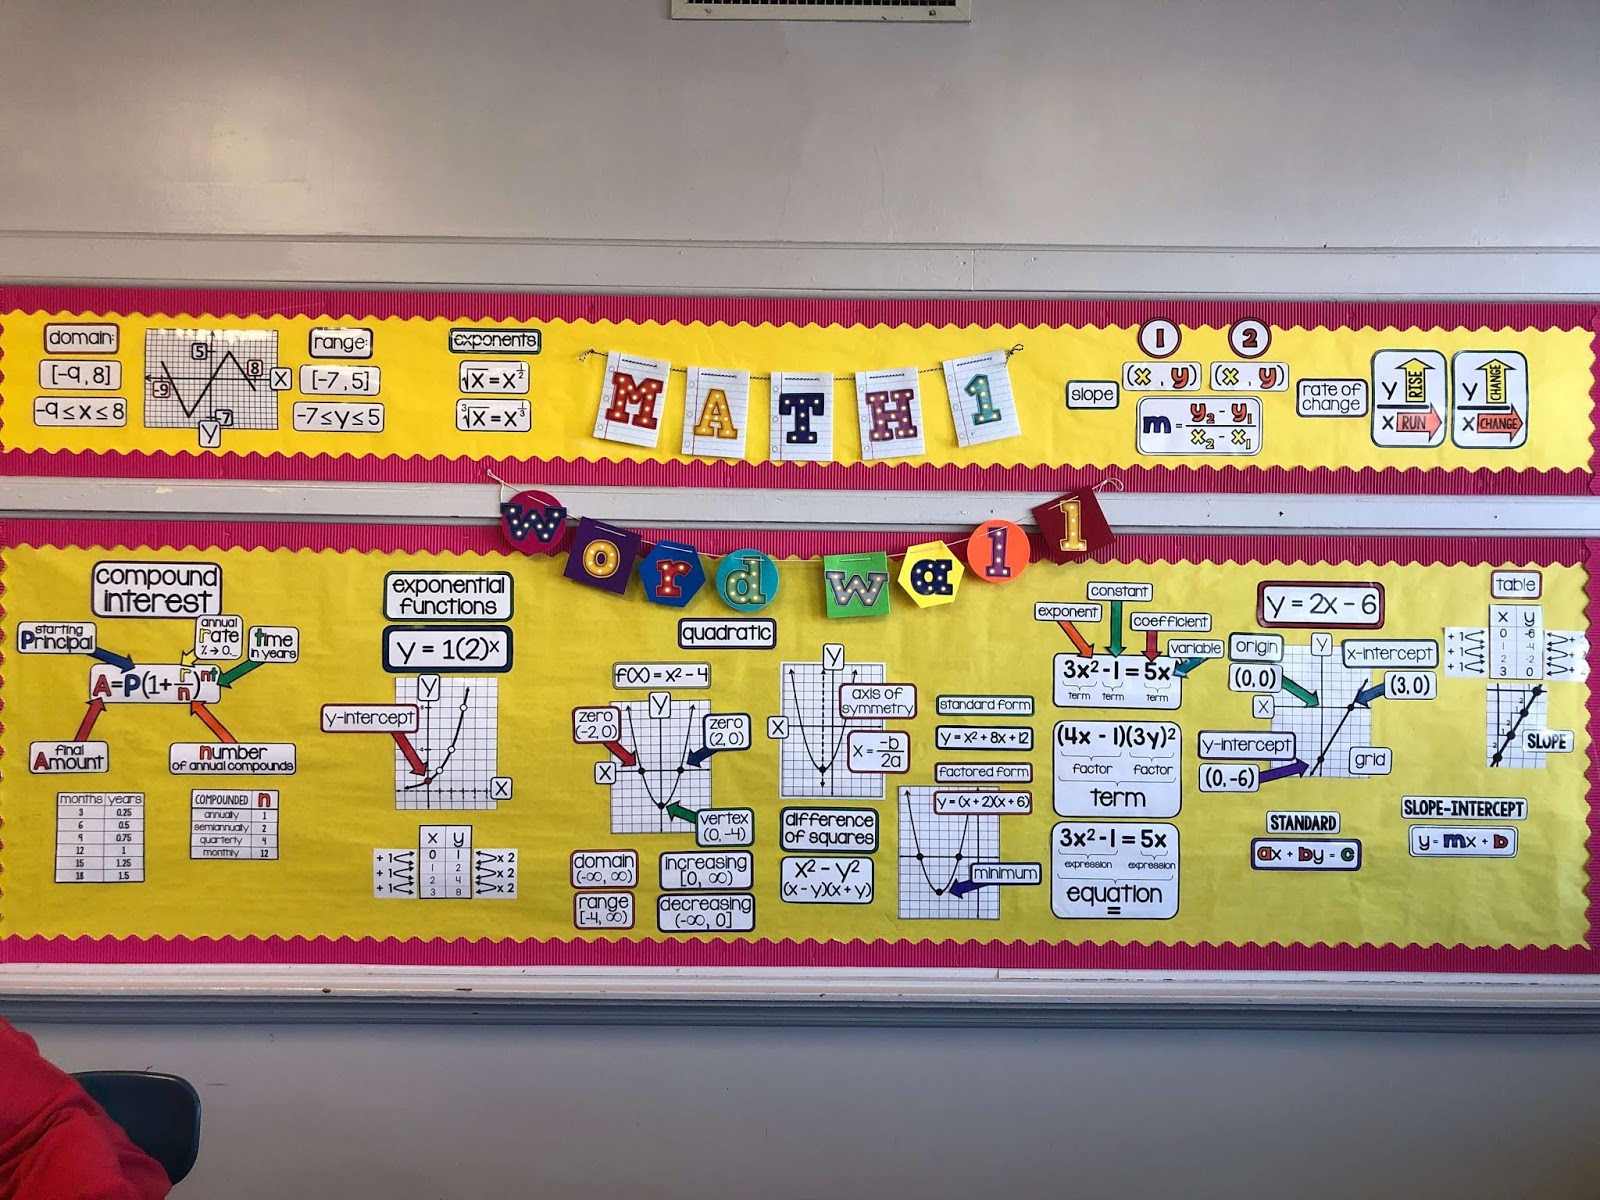 Using a Word Wall in Kindergarten